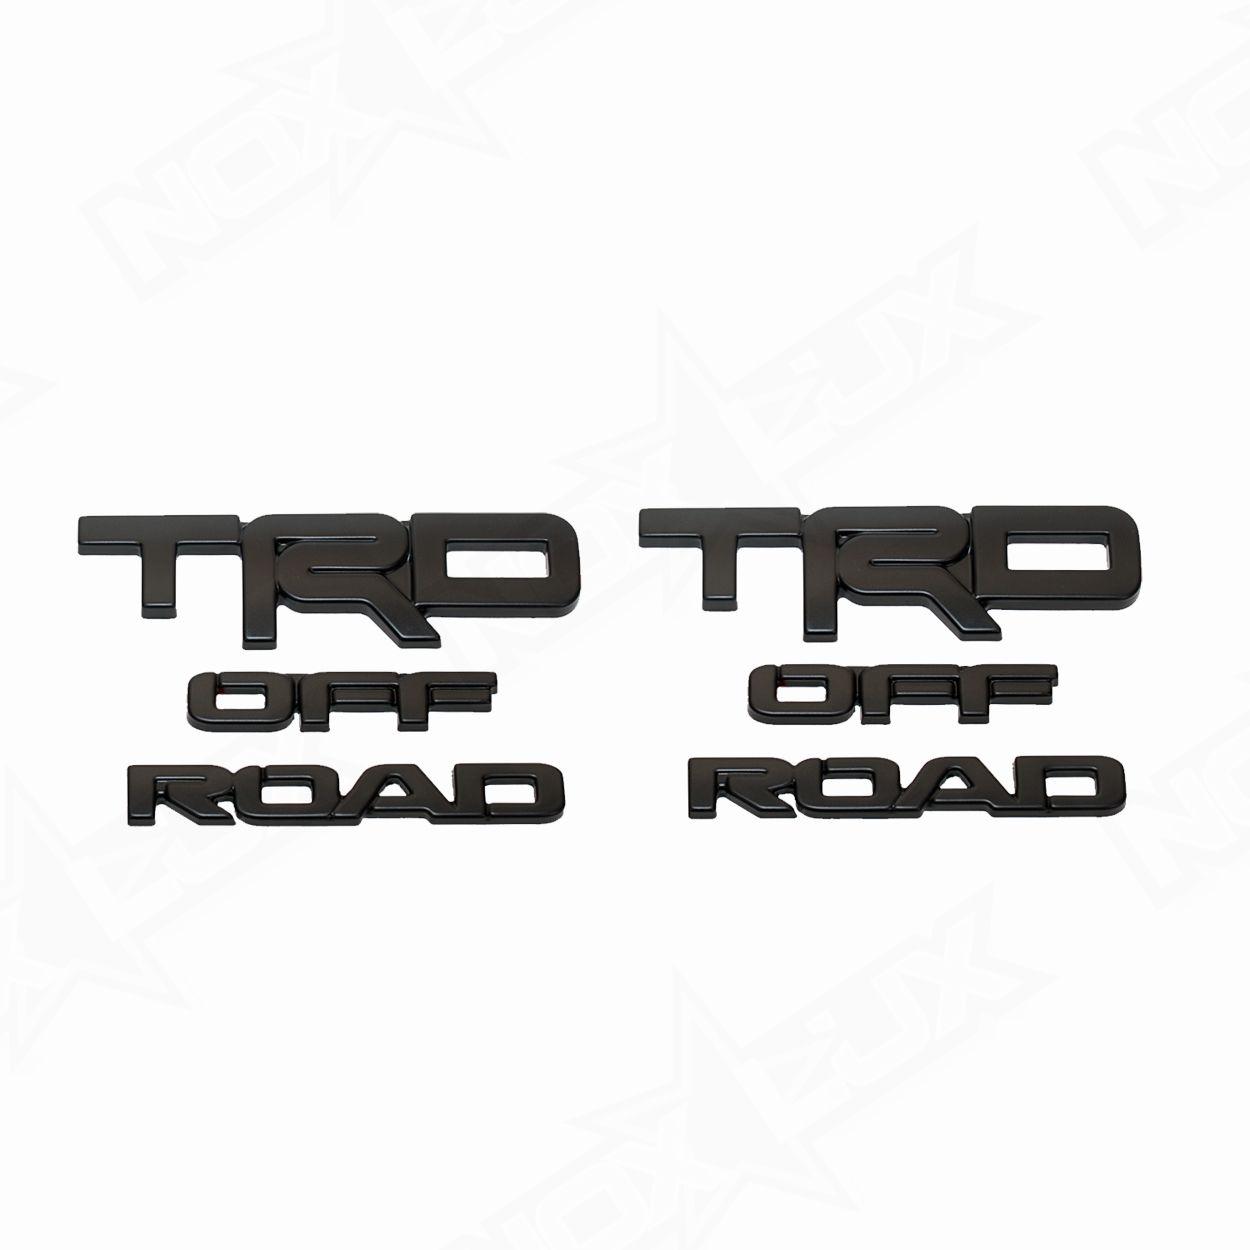 2018 Toyota Logo - 2017 2018 Toyota 4 Runner TRD Off Road Black Out Emblem Overlay Kits